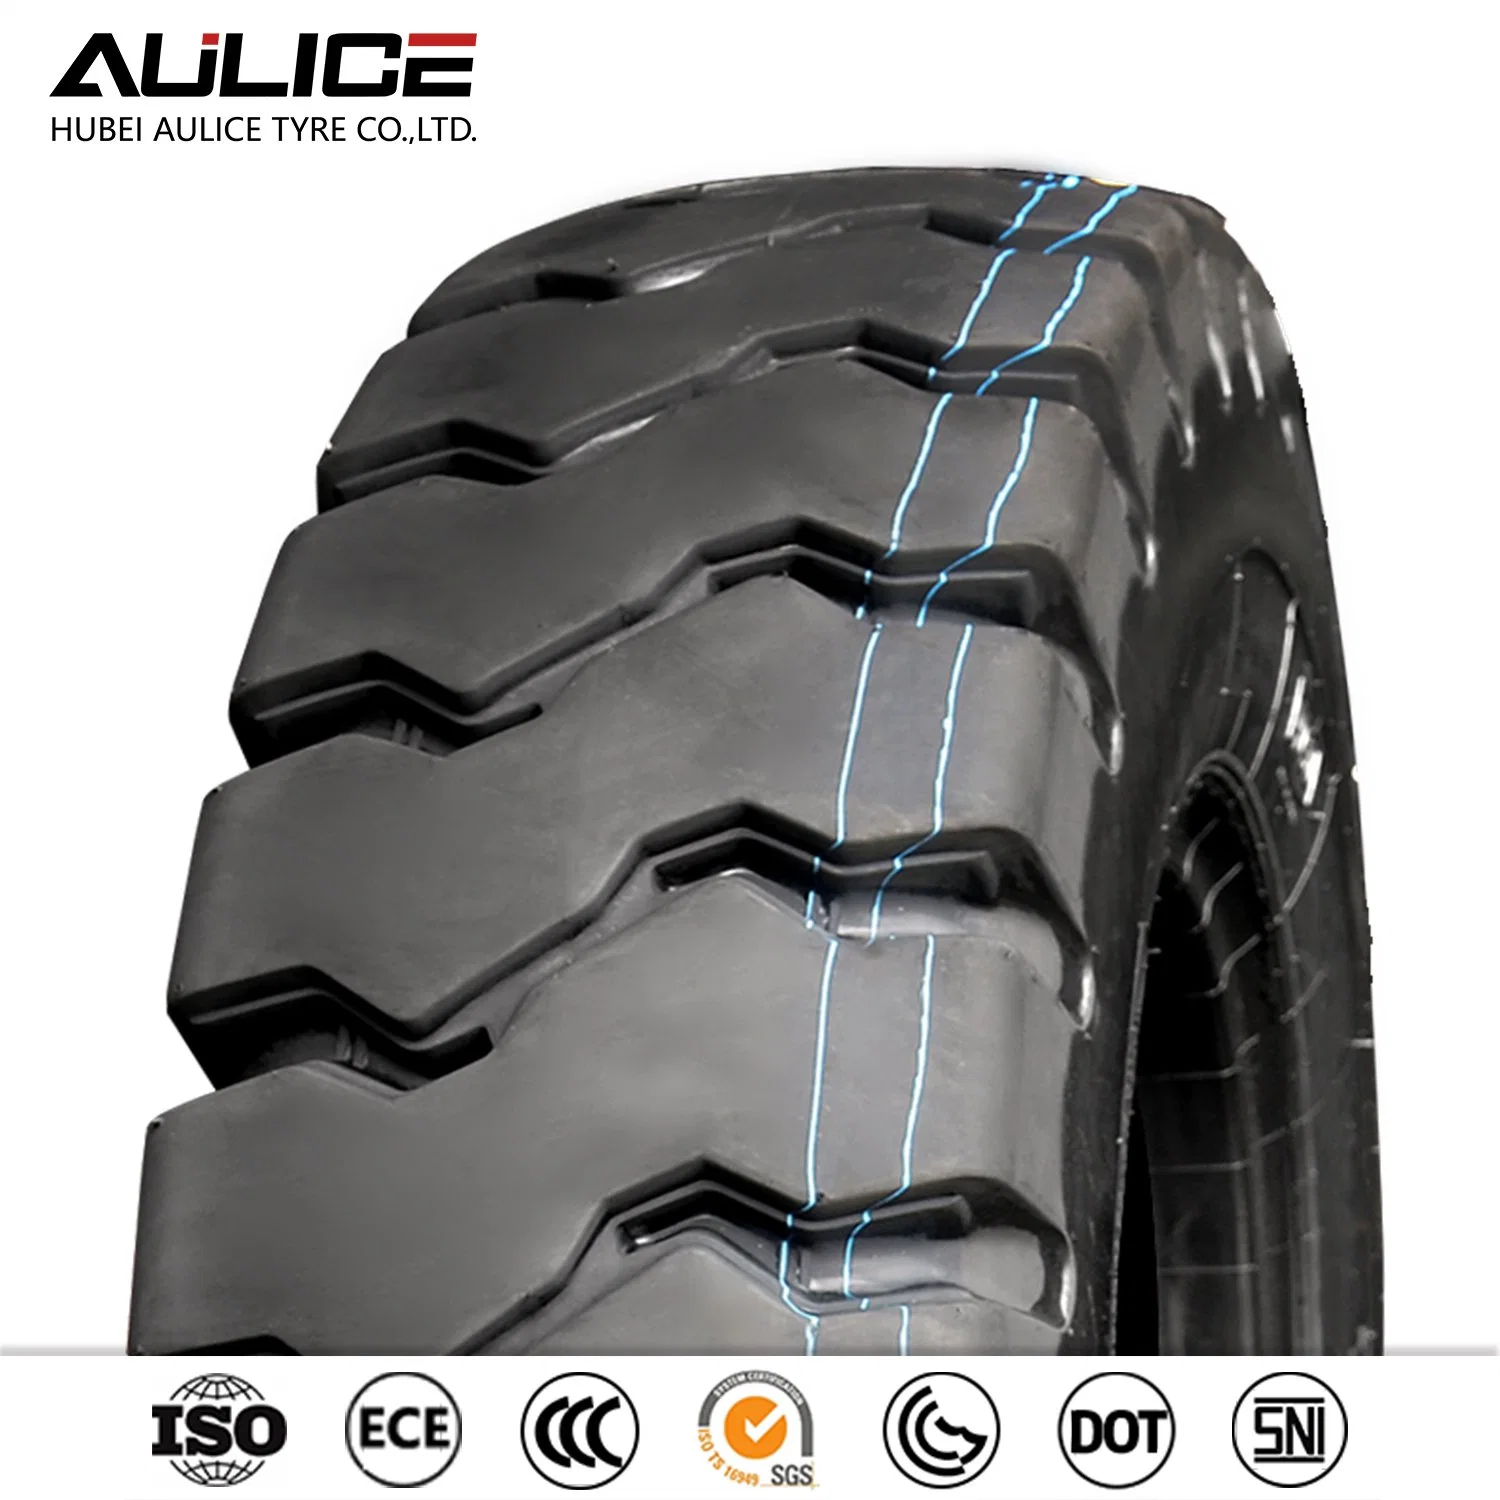 Pneus Aulice Brand Bias Tire L-5 23.5-25 OTR Off Road Pneus pneus pneus de construção pneus de exploração mineira para venda